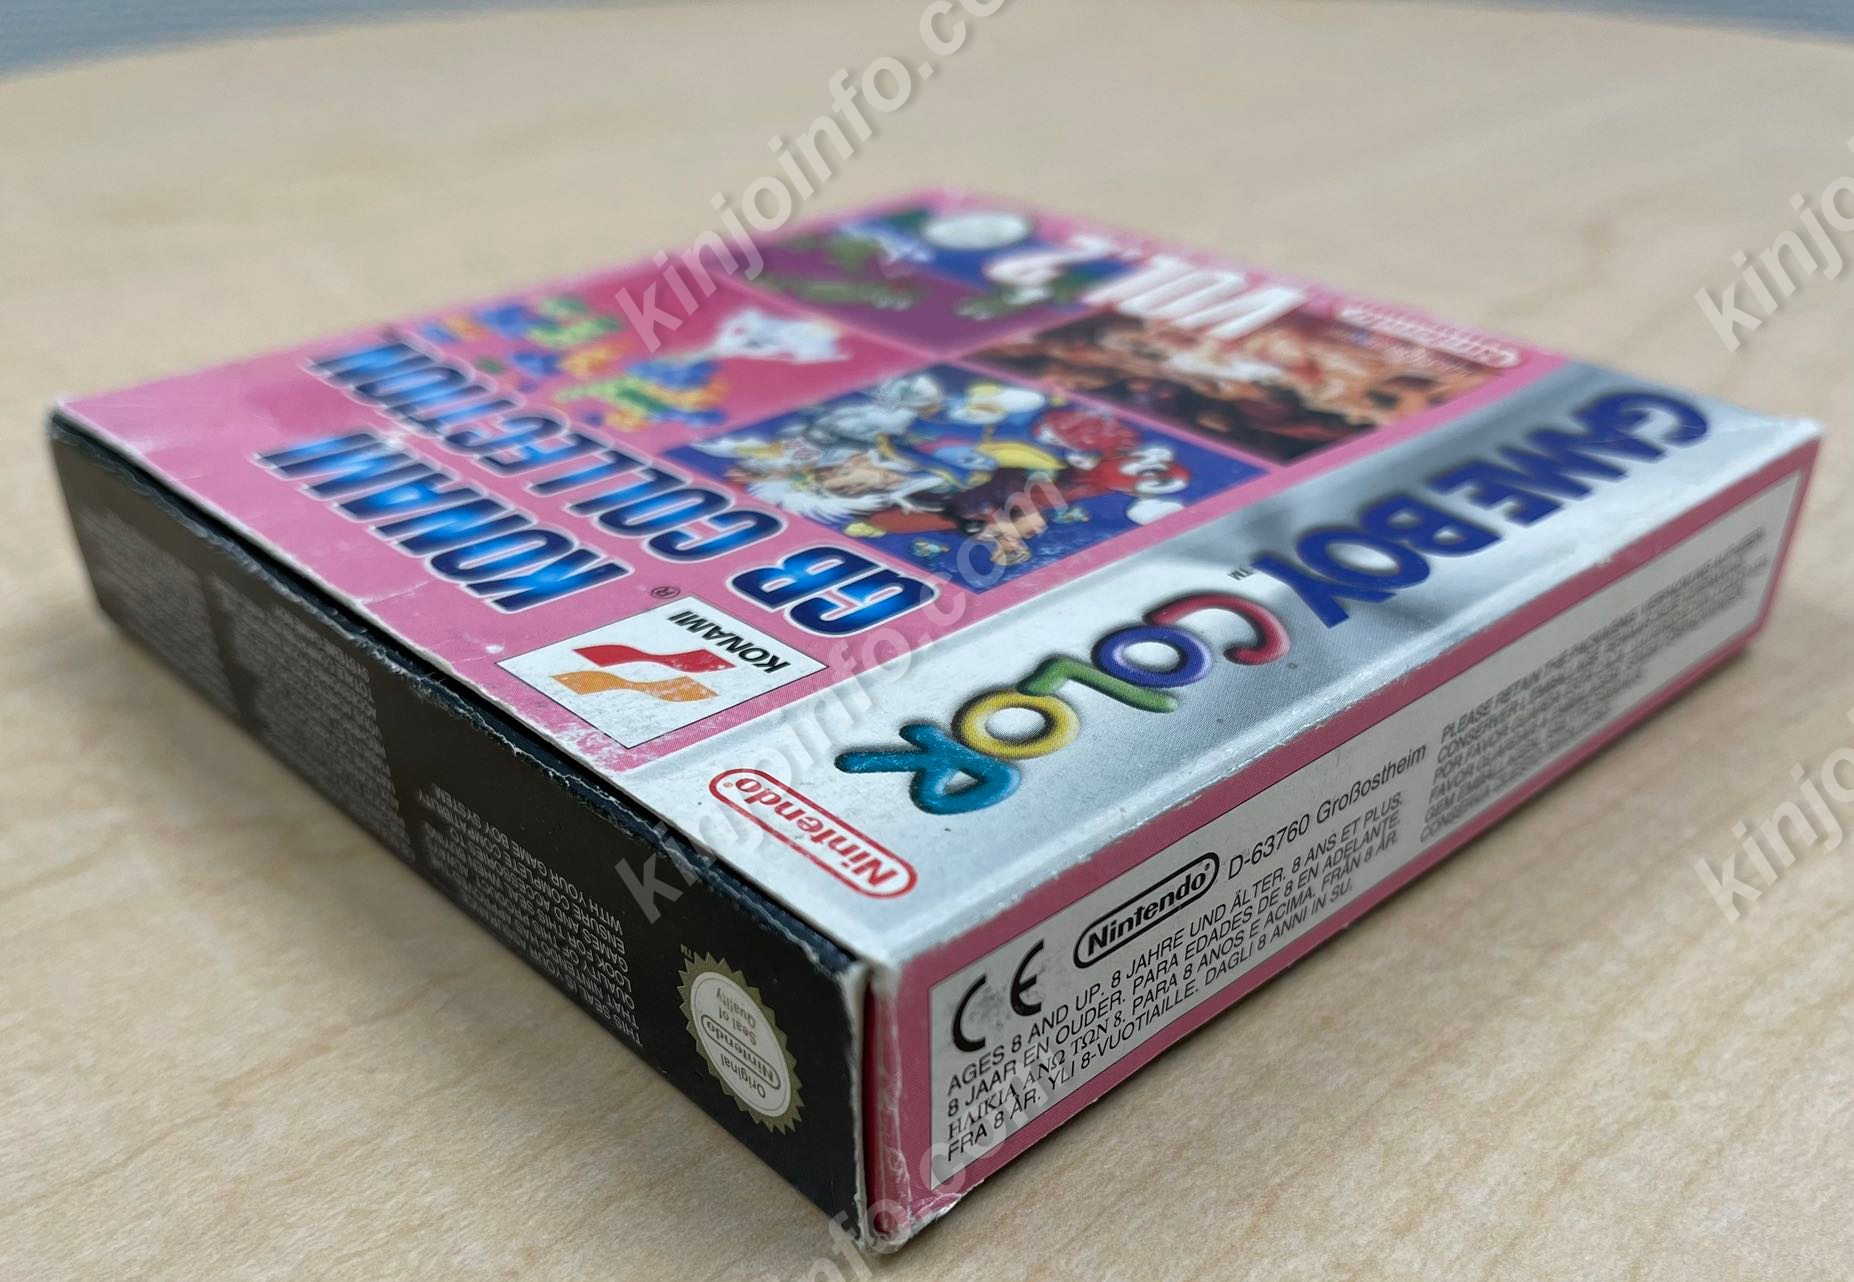 Konami GB Collection Vol.2（コナミGBコレクションVol.2)【中古・GBC 